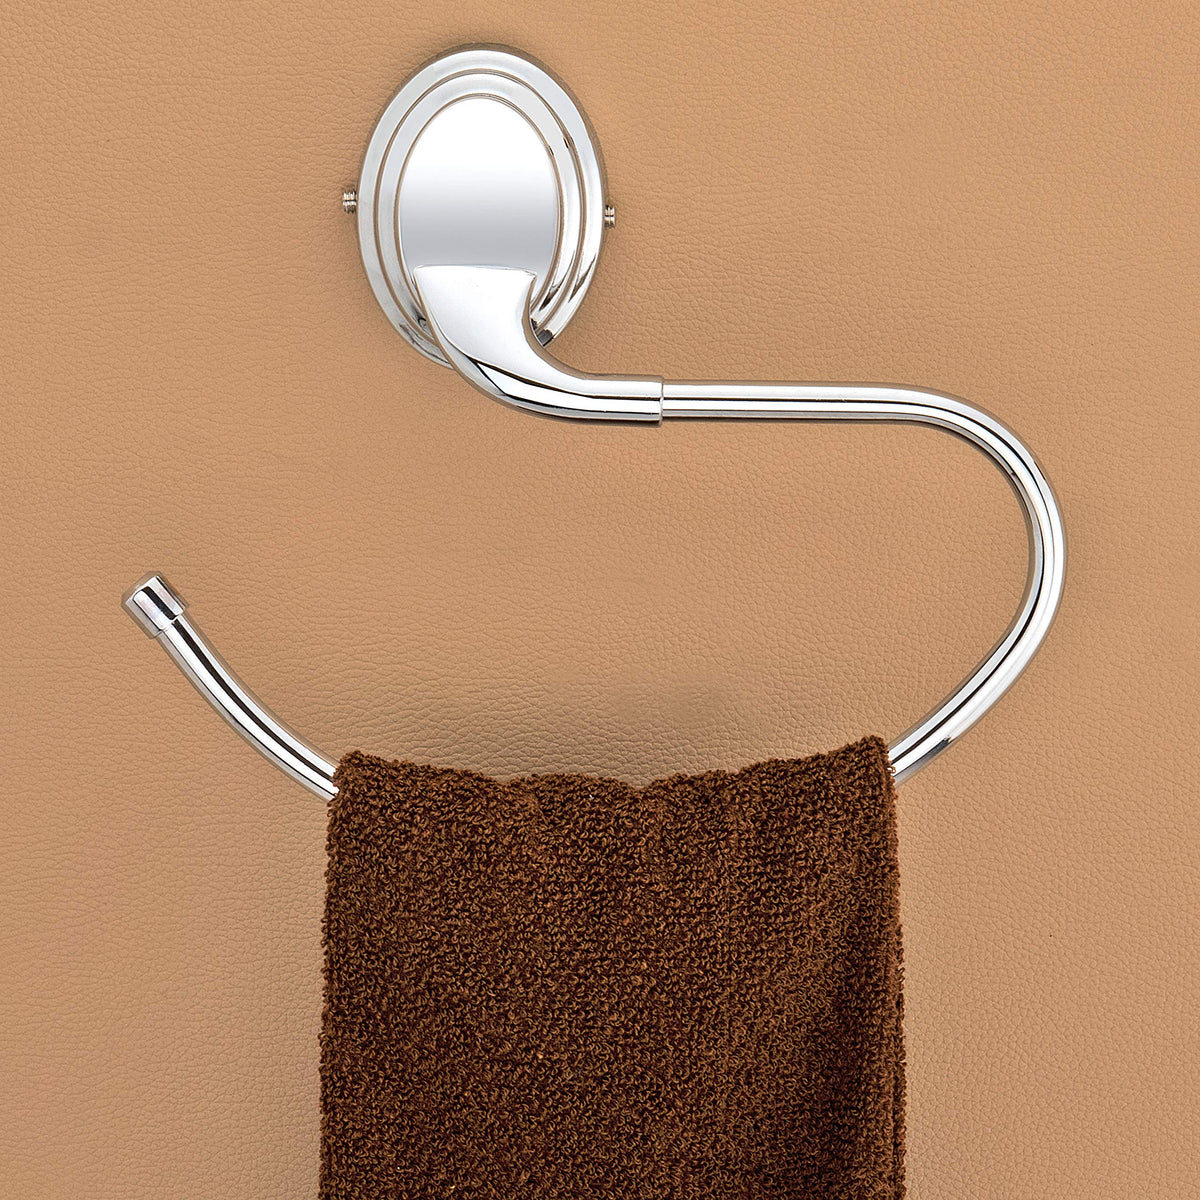 Plantex Stainless Steel 304 Grade Cubic Napkin Ring/Towel Ring/Napkin Holder/Towel Hanger/Bathroom Accessories(Chrome) - Pack of 1